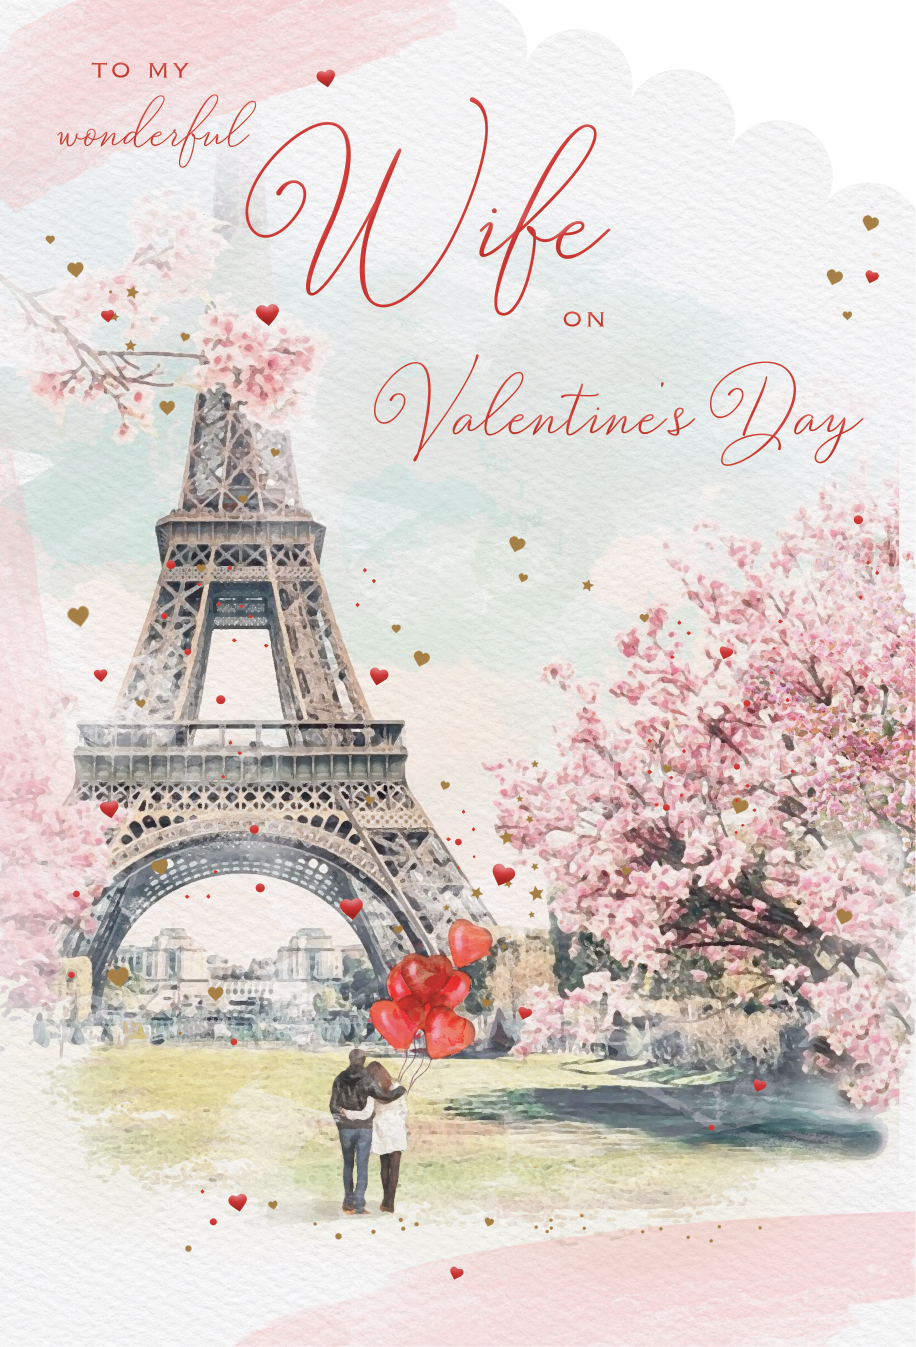 Wife Valentine’s Day card - Paris